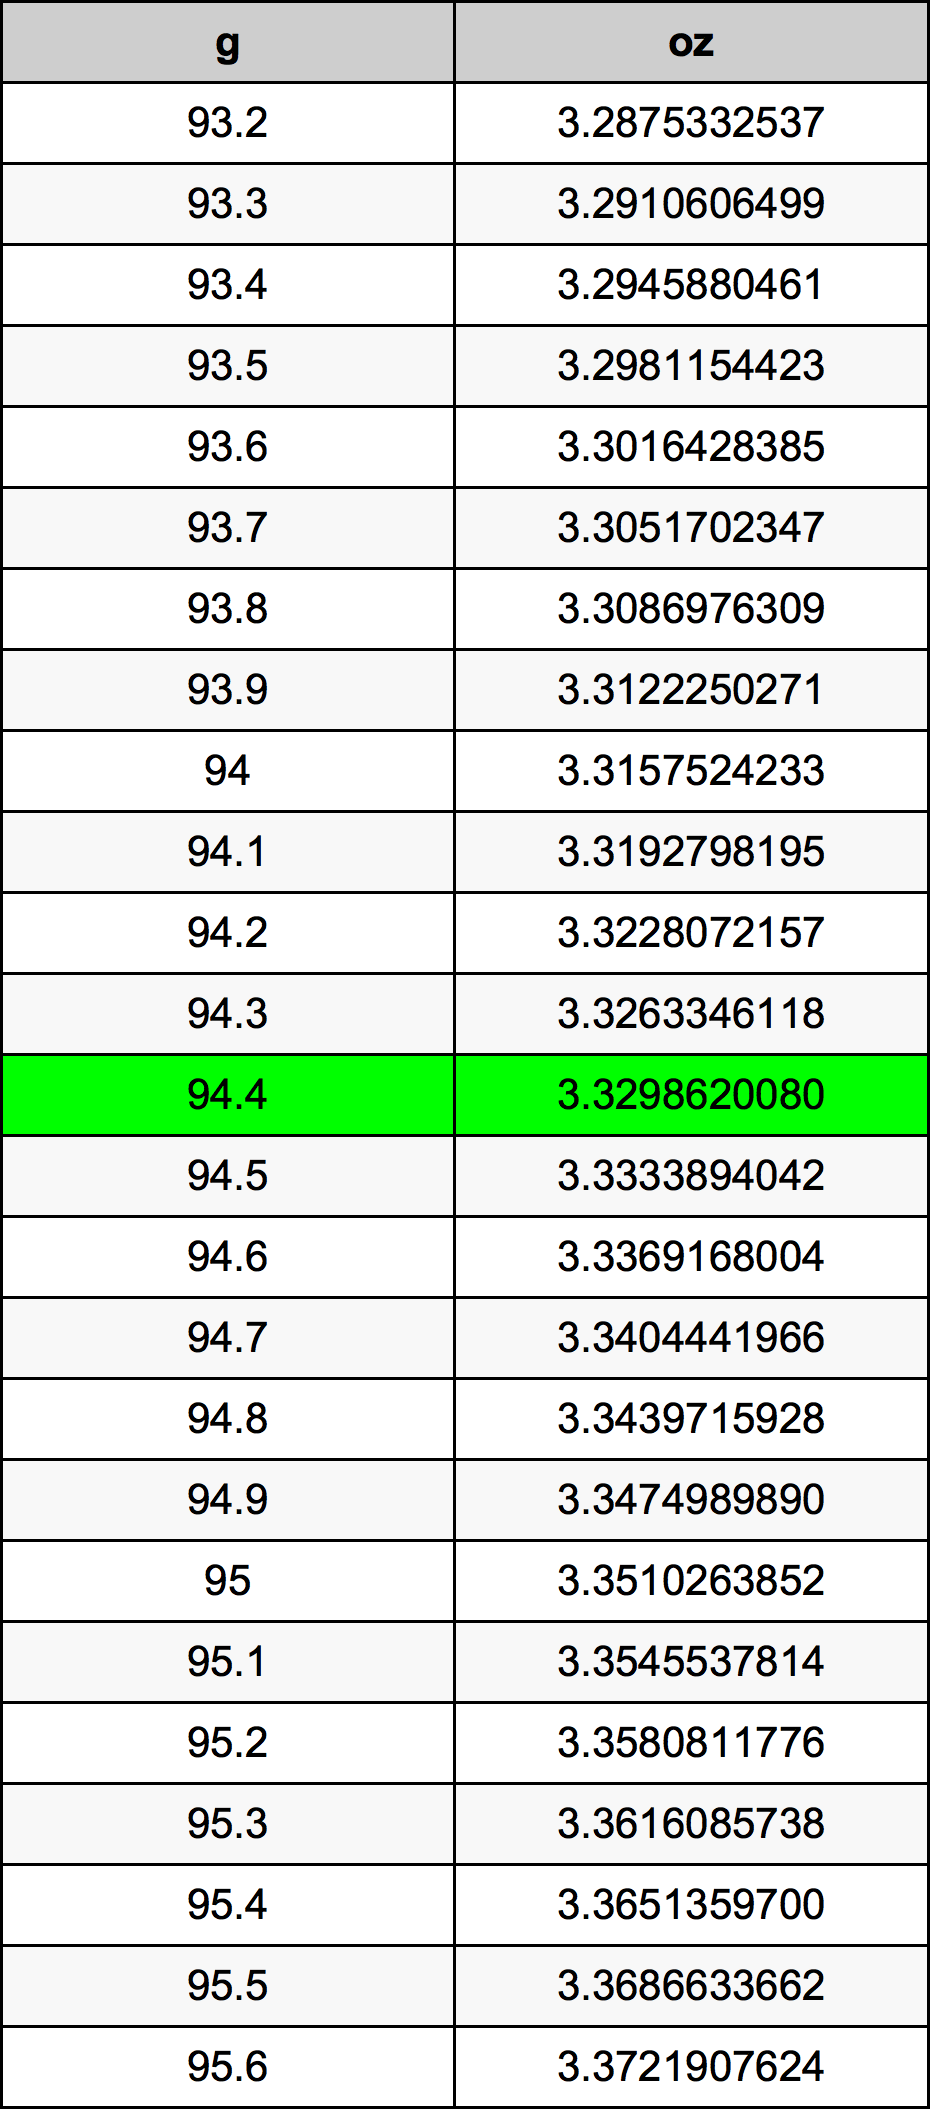 94.4 غرام جدول تحويل